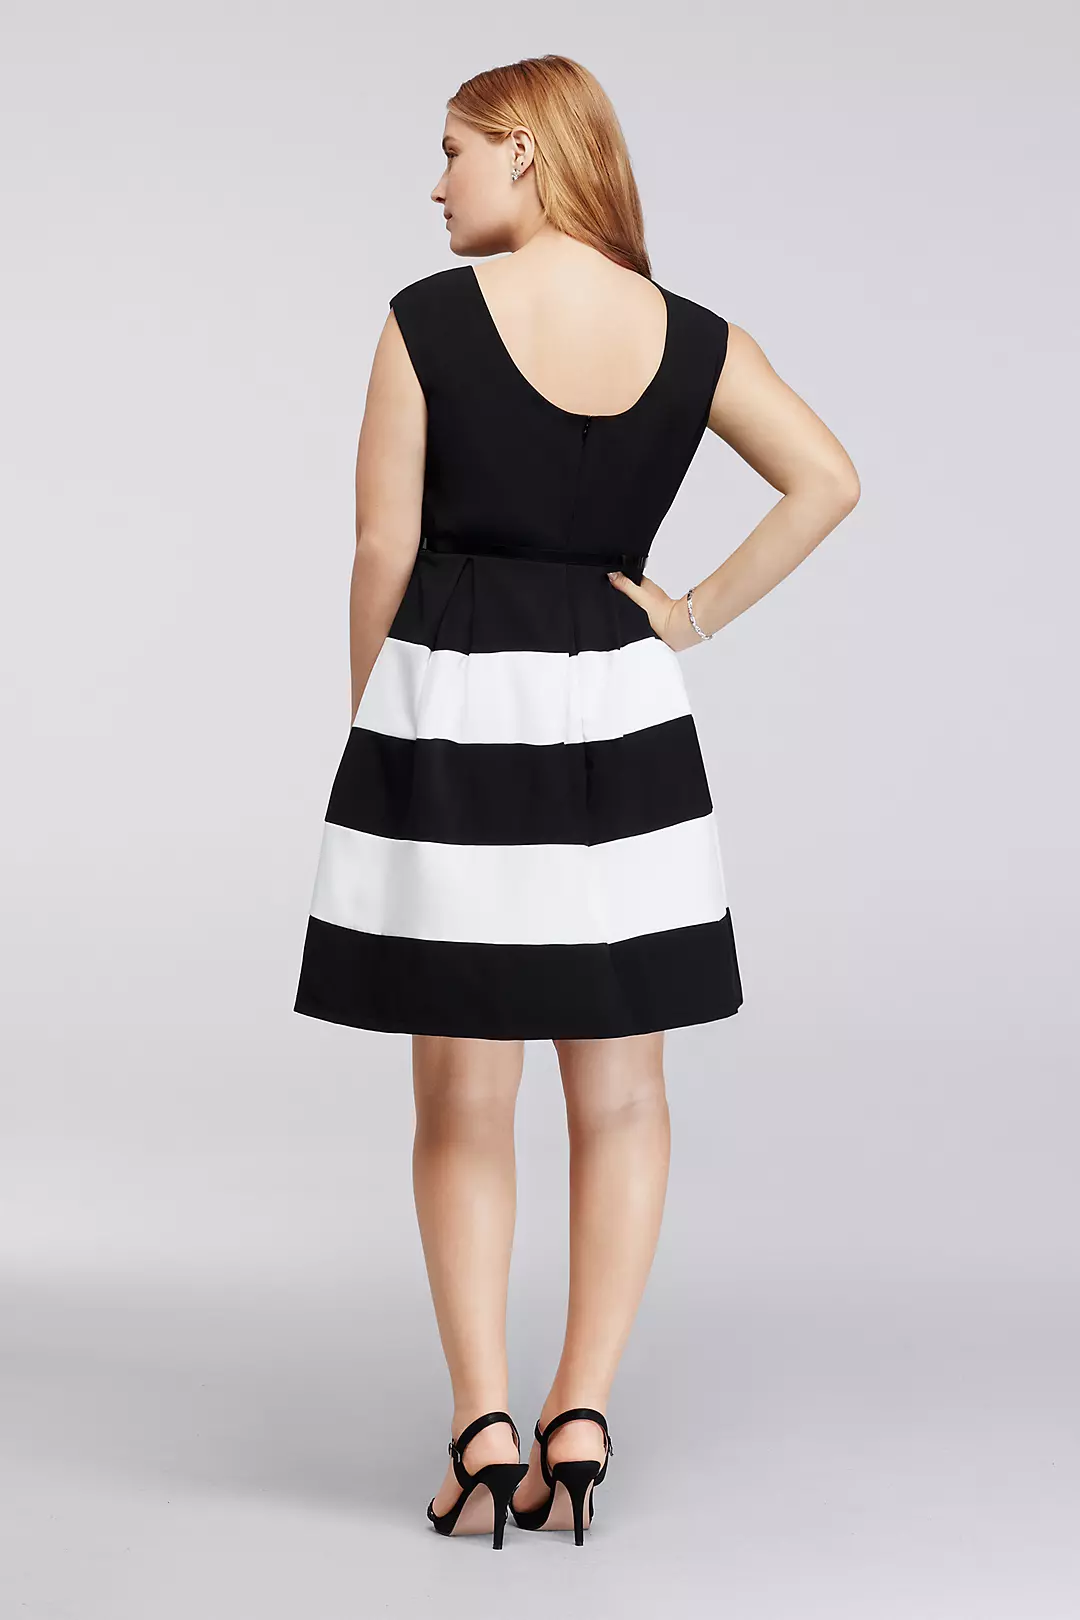 Short Sleeve Striped Work Dress with Belt Image 2